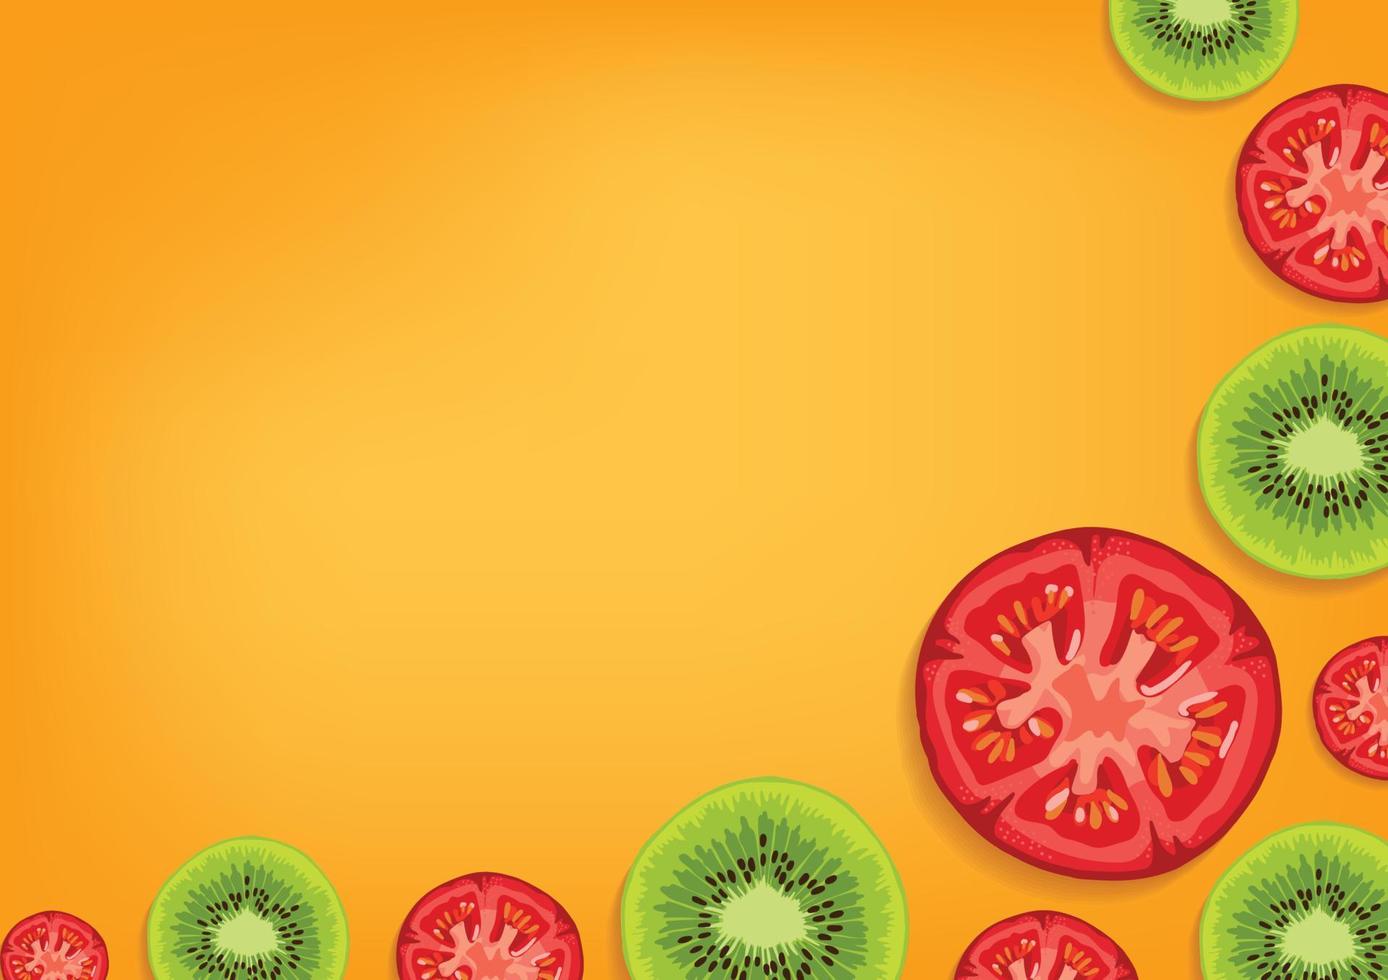 kiwi en tomaat vers fruit en groente achtergrond vector